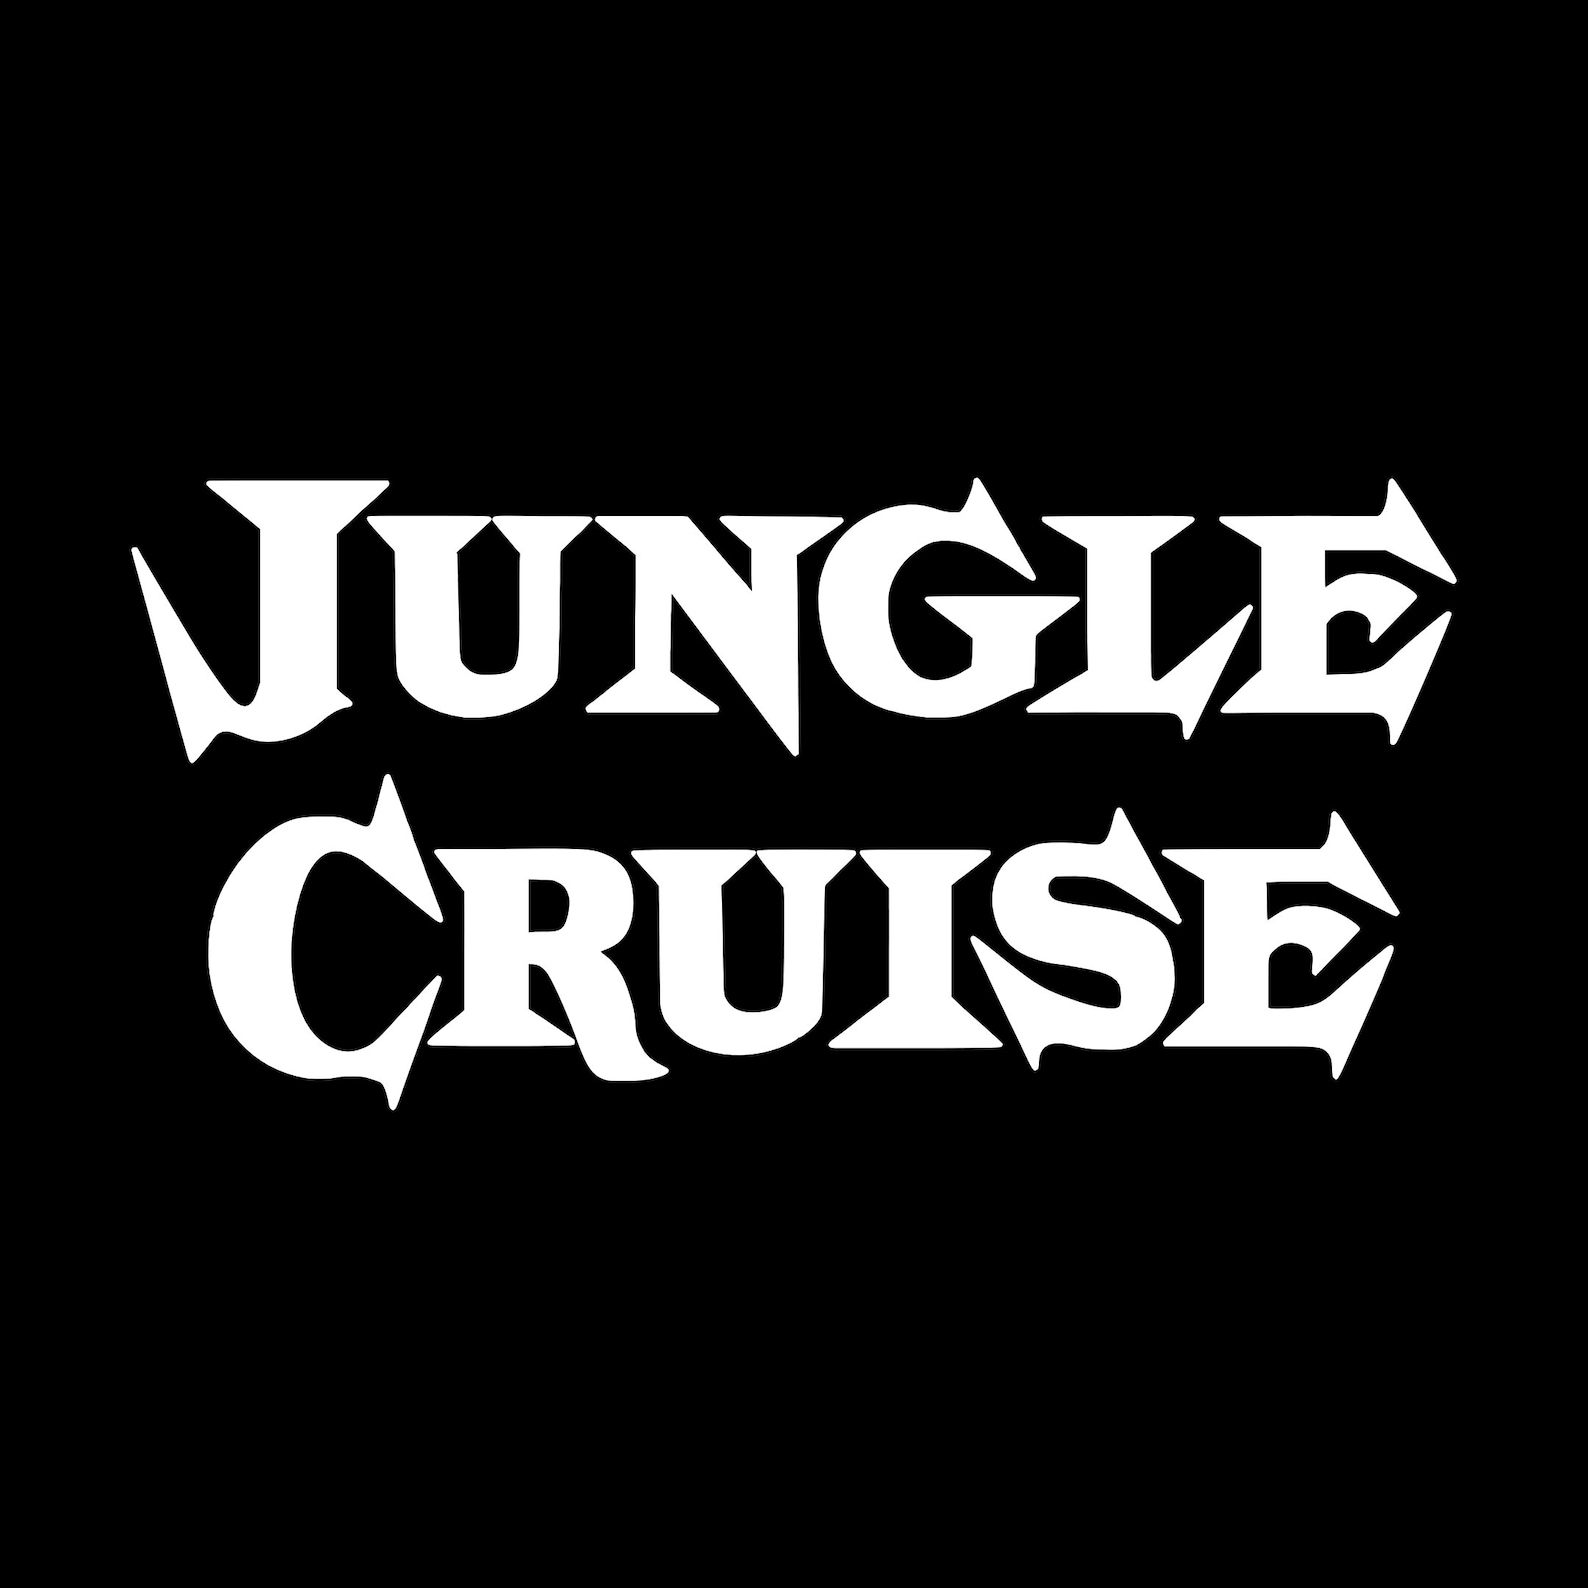 disney logo jungle cruise variant